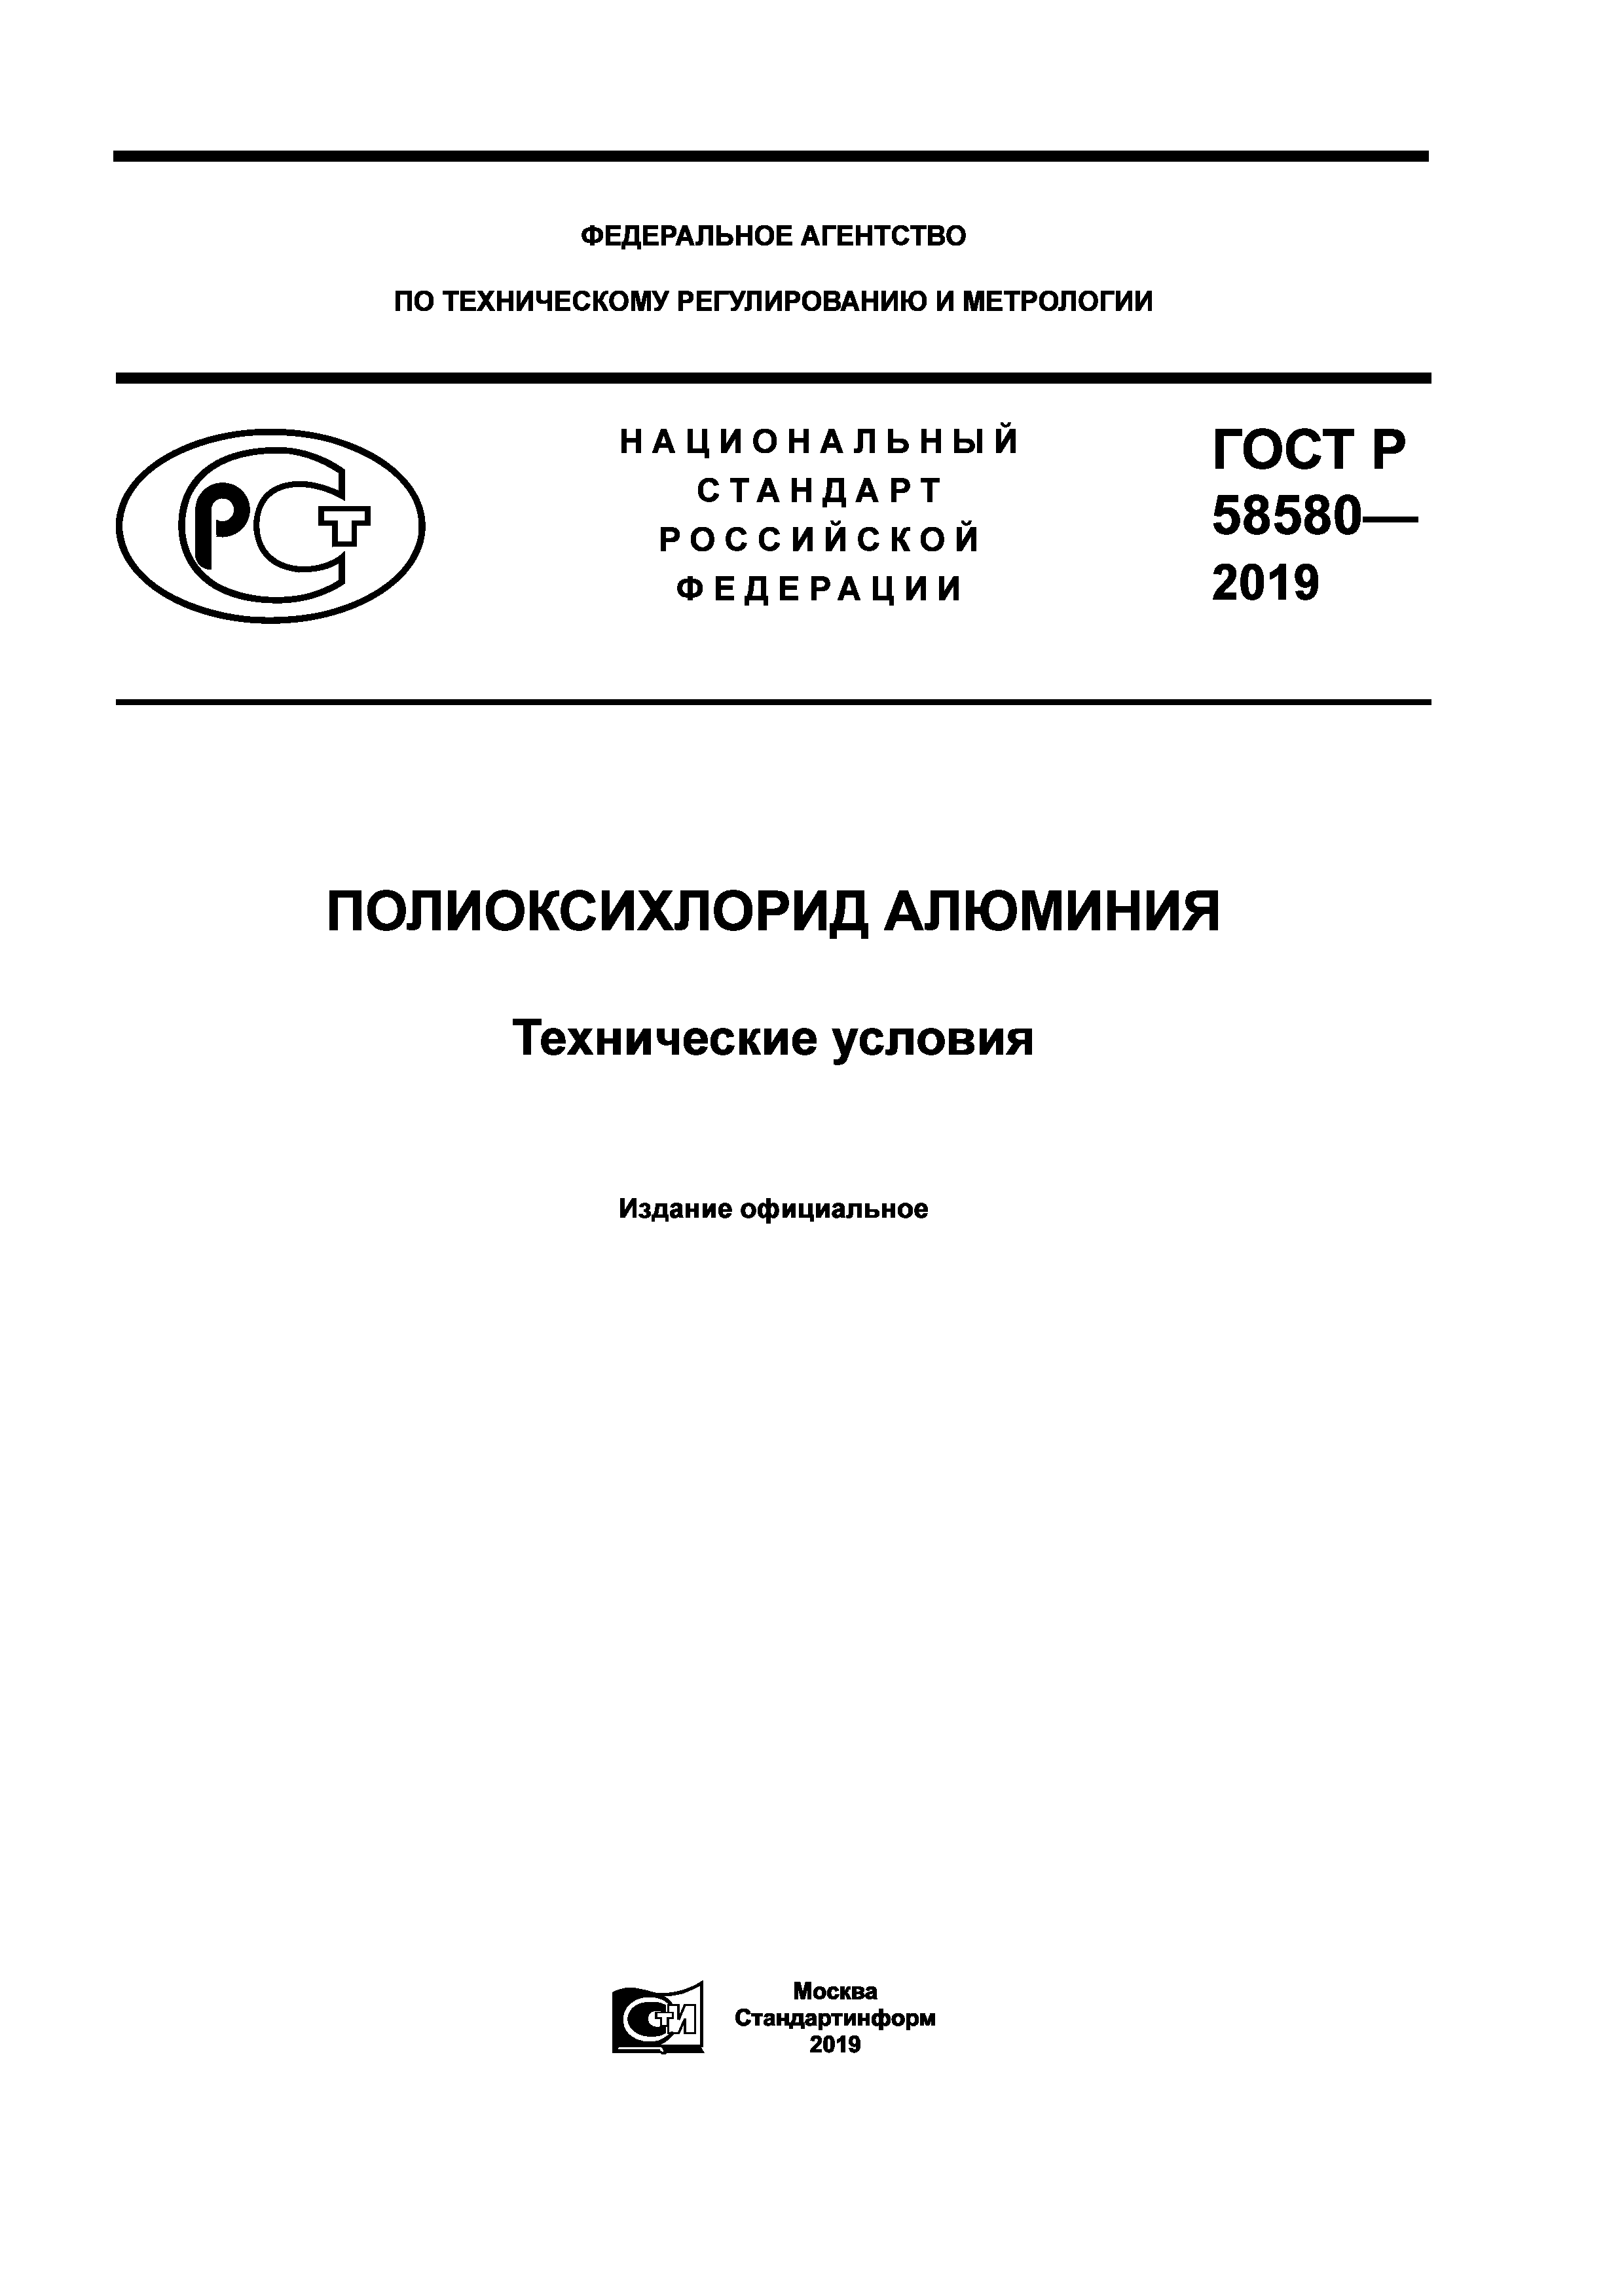 ГОСТ Р 58580-2019